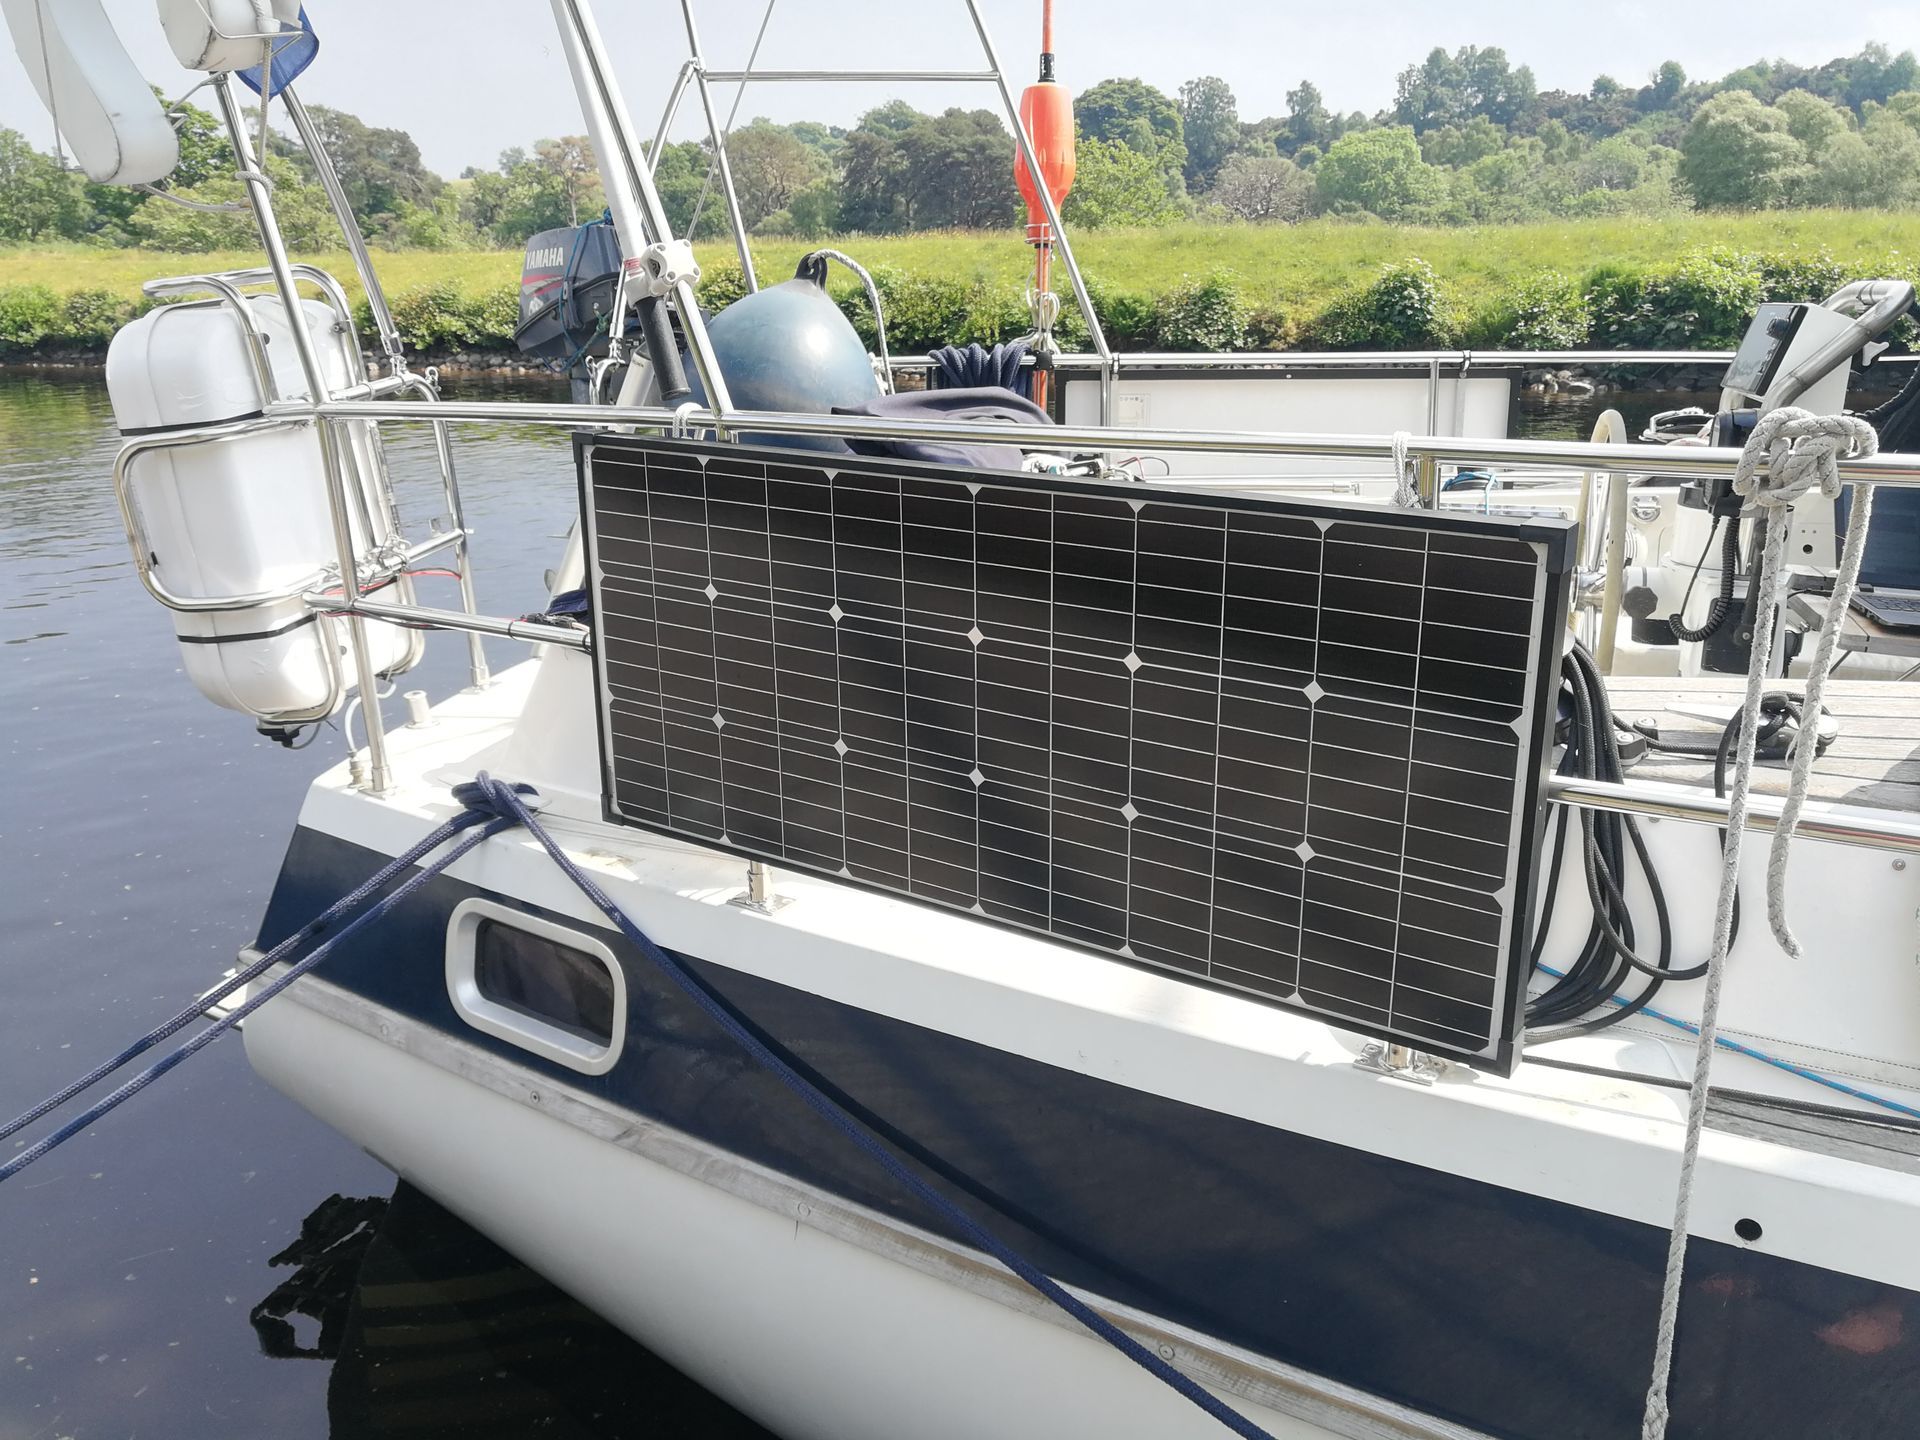 Solar panel on sailboat Aim by SolarV